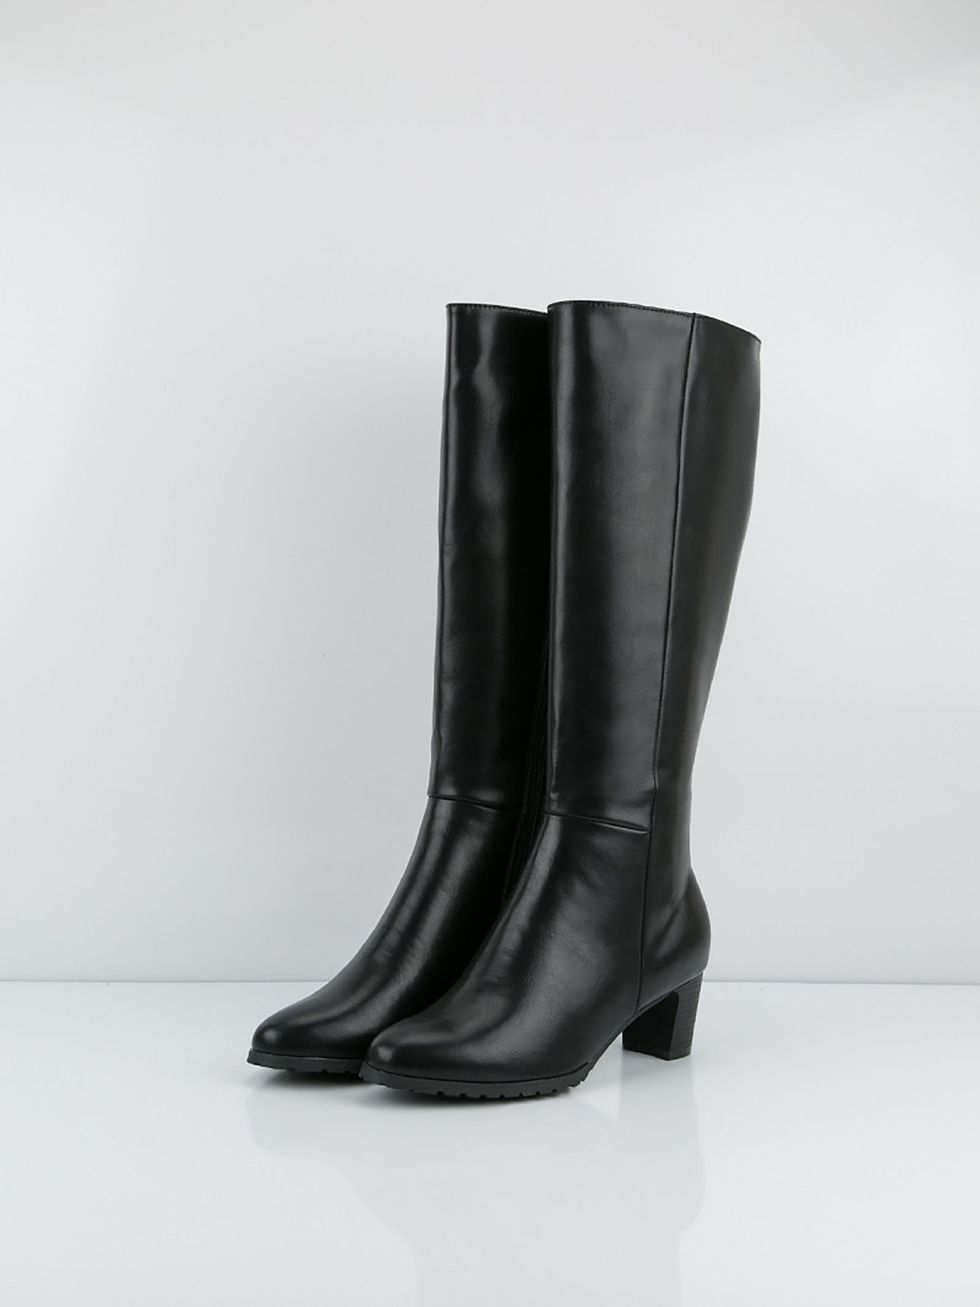 Footwear, Boot, Shoe, Riding boot, Knee-high boot, Leather, Rain boot, Durango boot, High heels, 